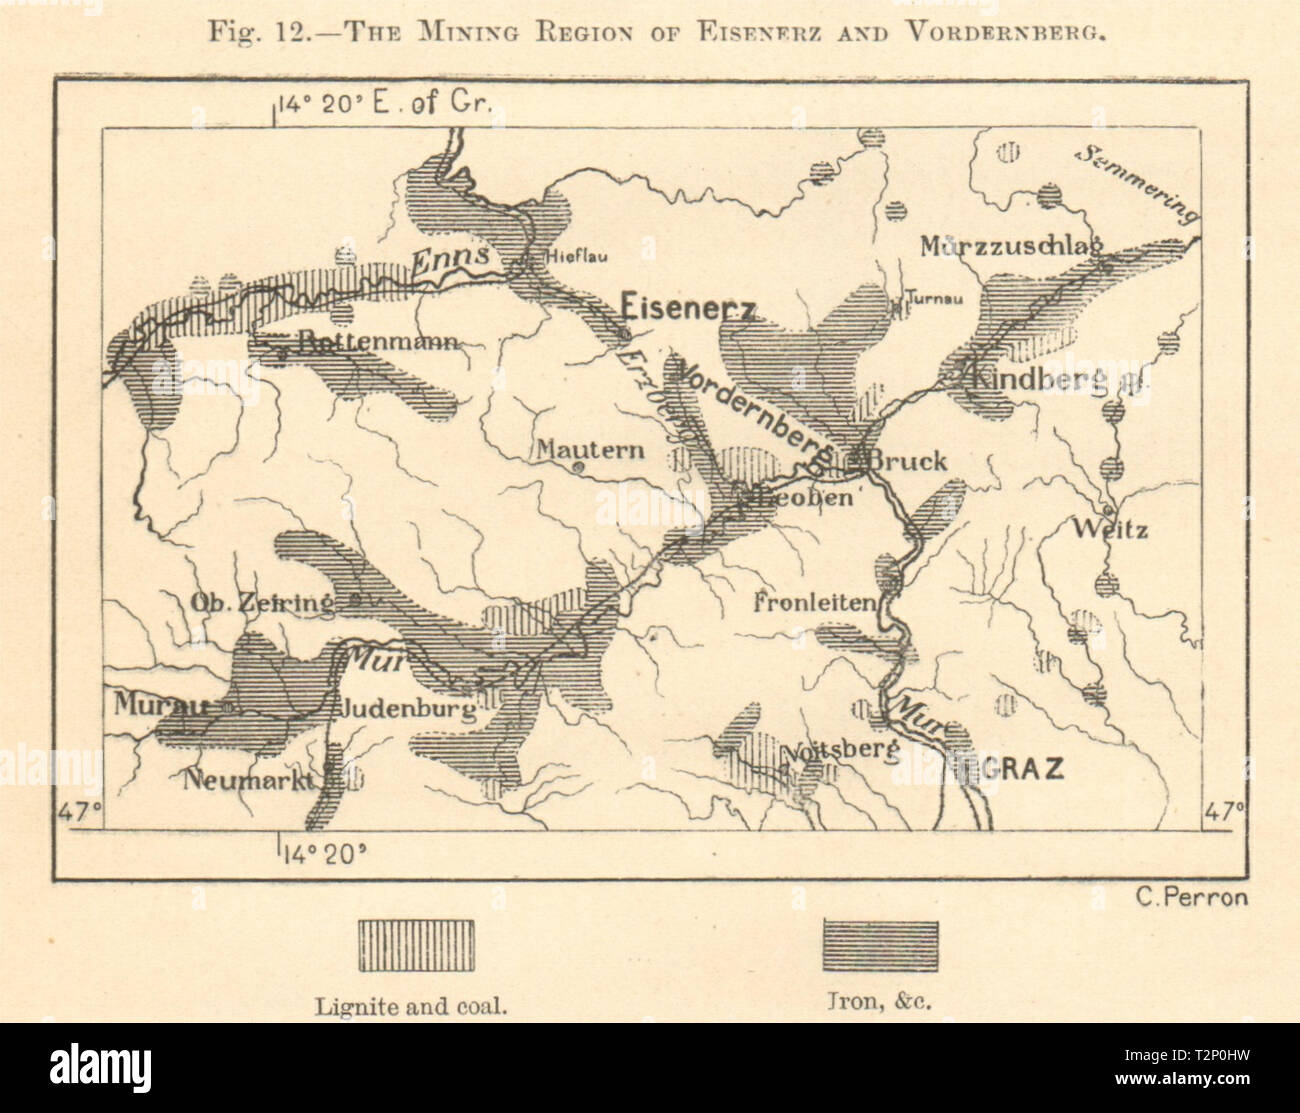 Eisenerz & Vordernberg lignite coal iron mining region. Austria. Sketch map 1885 Stock Photo